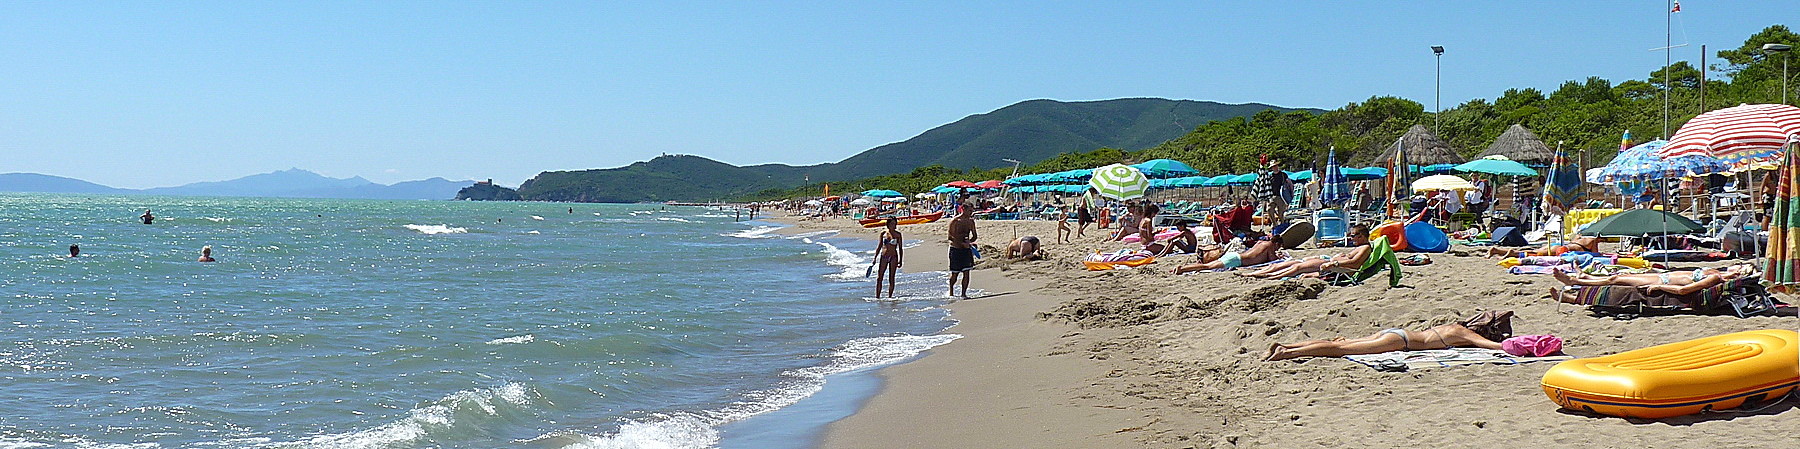 Castiglione della Pescaia, pláž směrem k Punta Ala